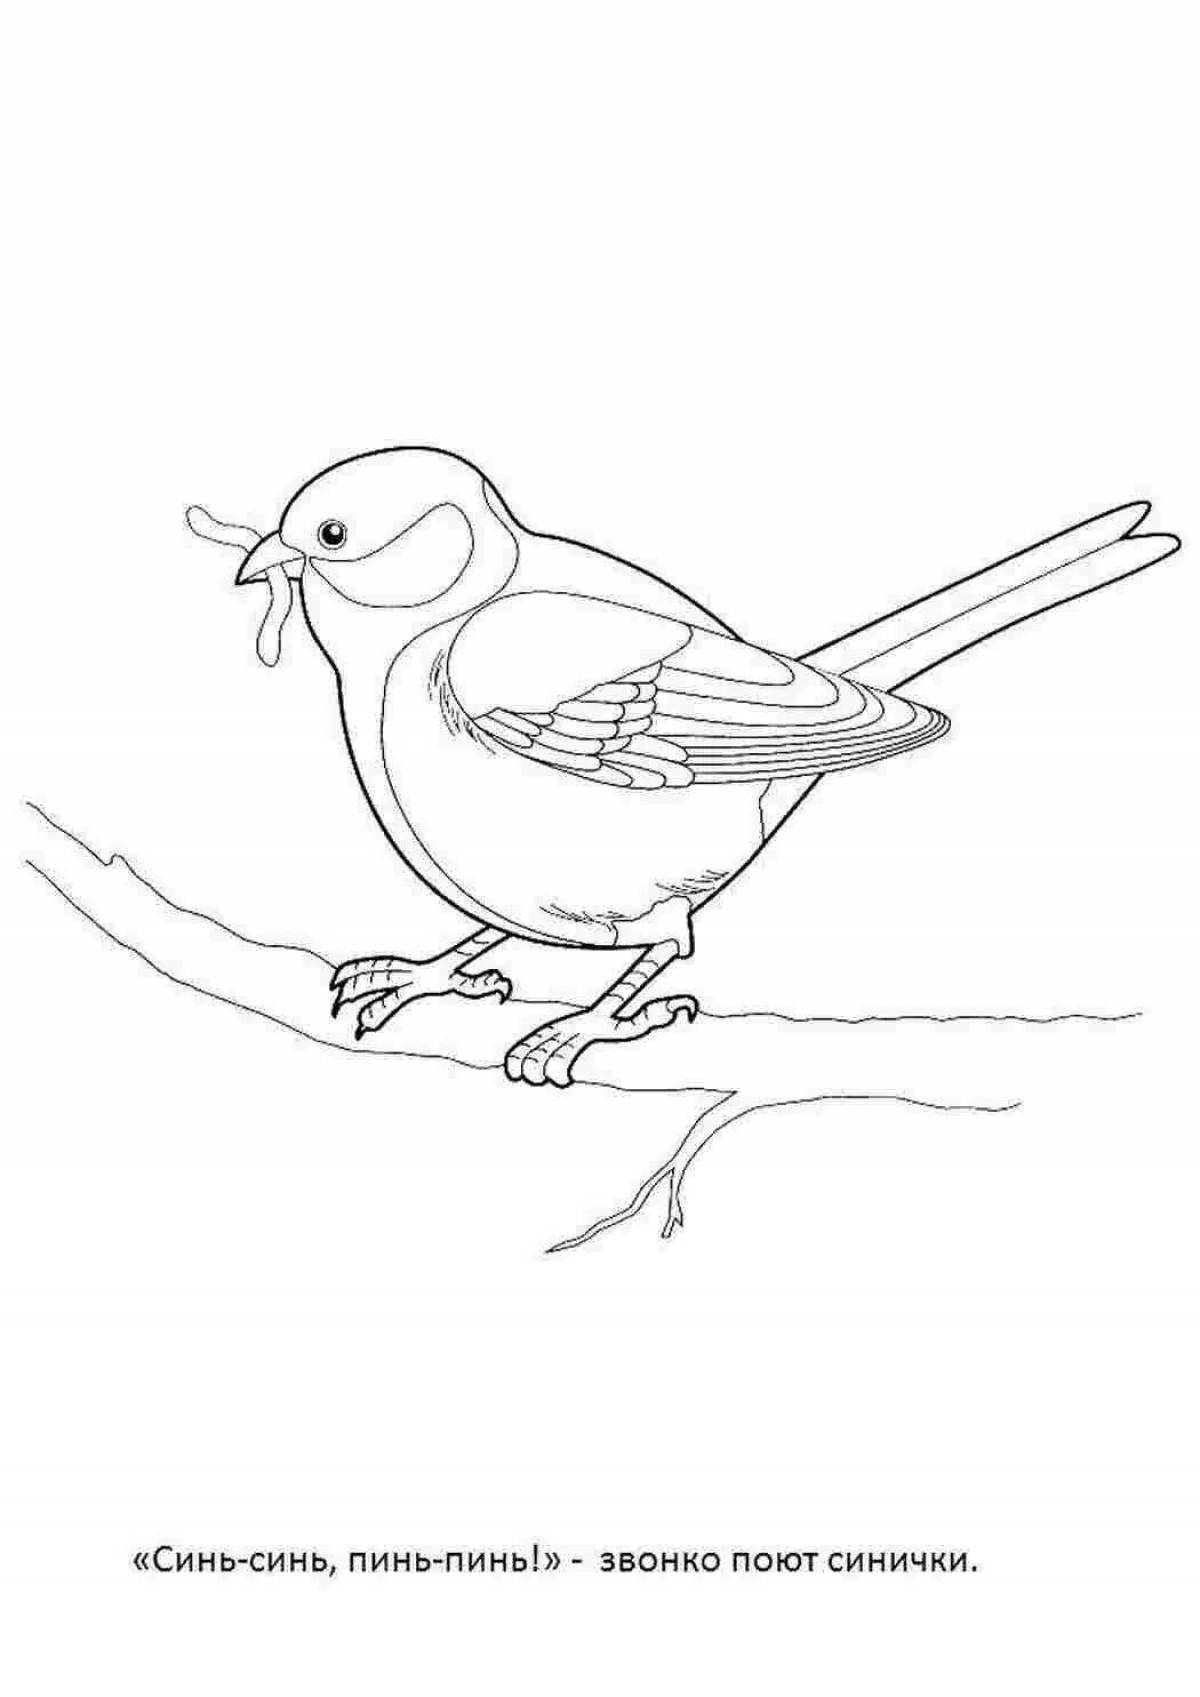 Fun bird coloring for kids